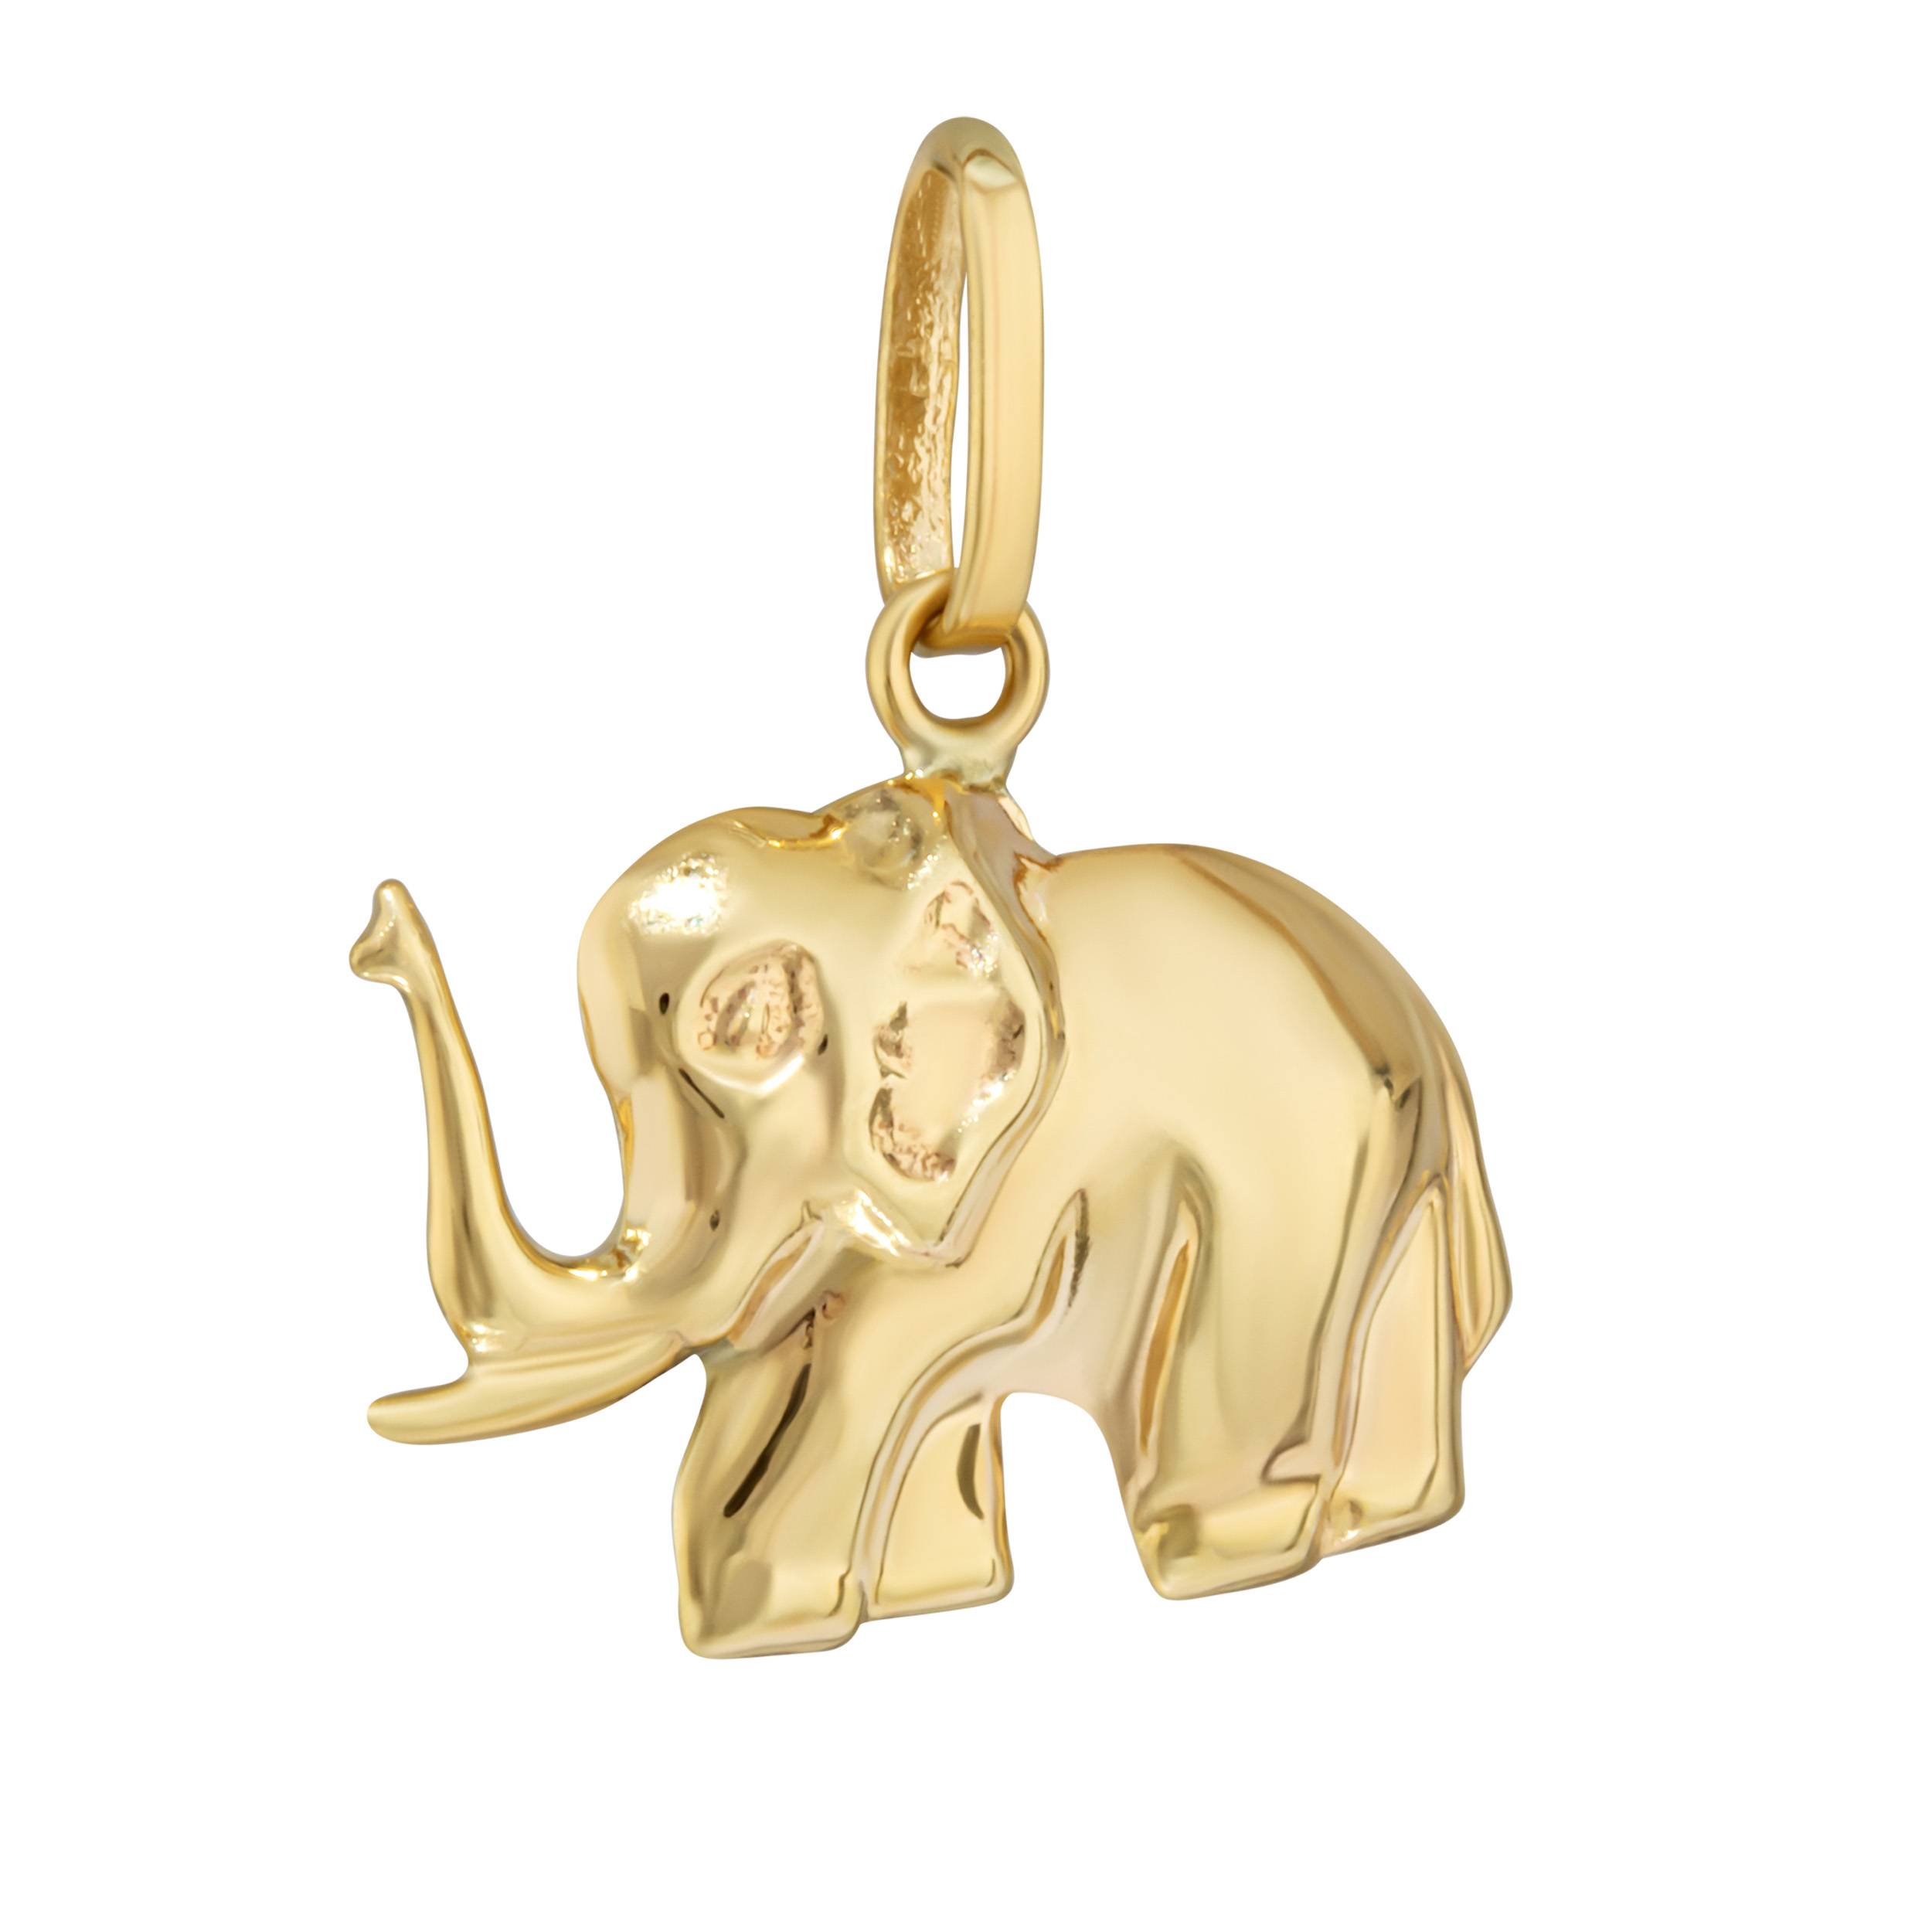 Kettenanhnger Elefant 333 Gelb gold 8 Karat 16x12mm Talisman Amulett Anhnger 